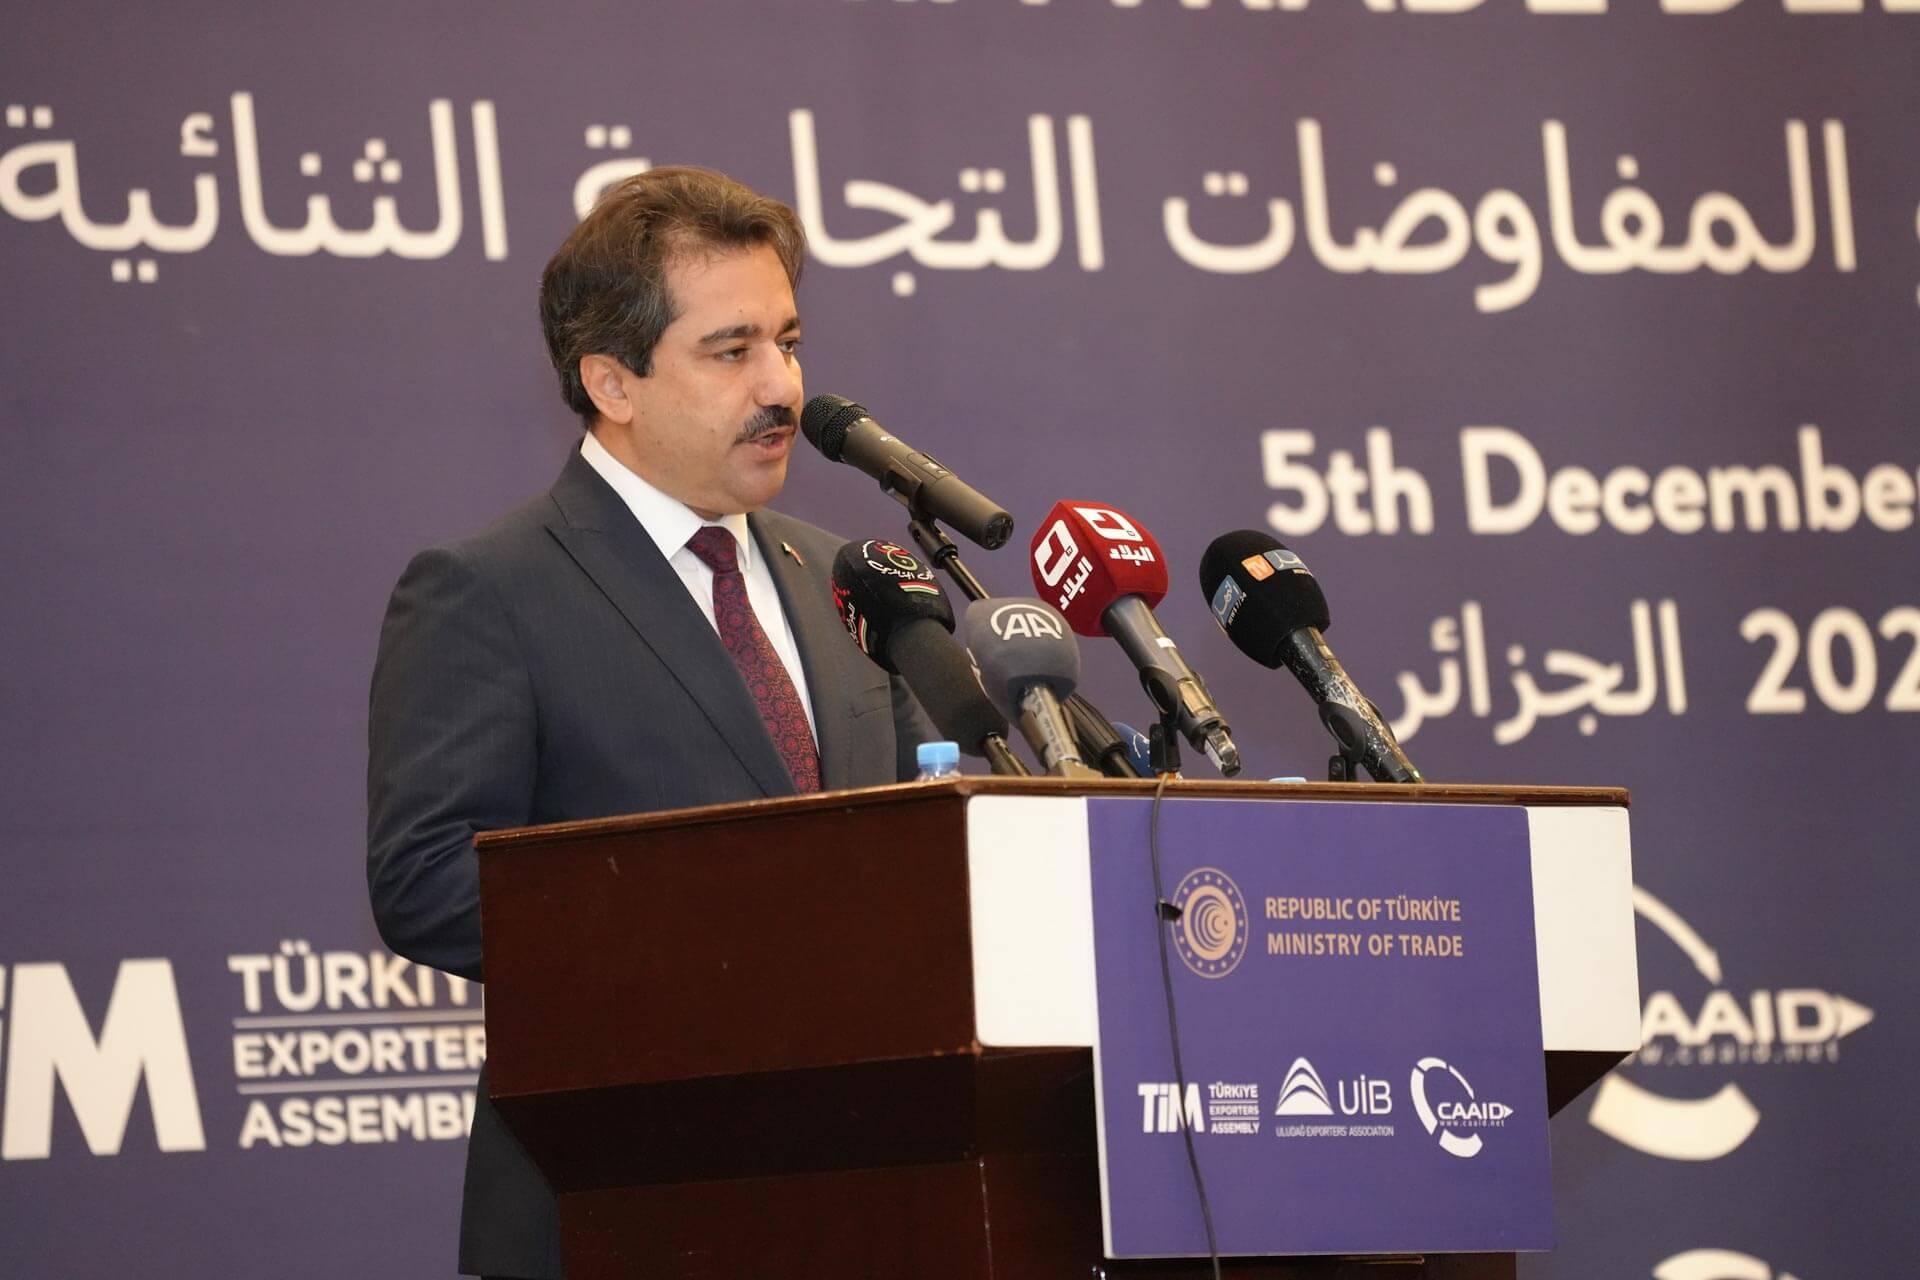 Our Ambassador Mr. M. Mücahit Yazıcı made a speech.